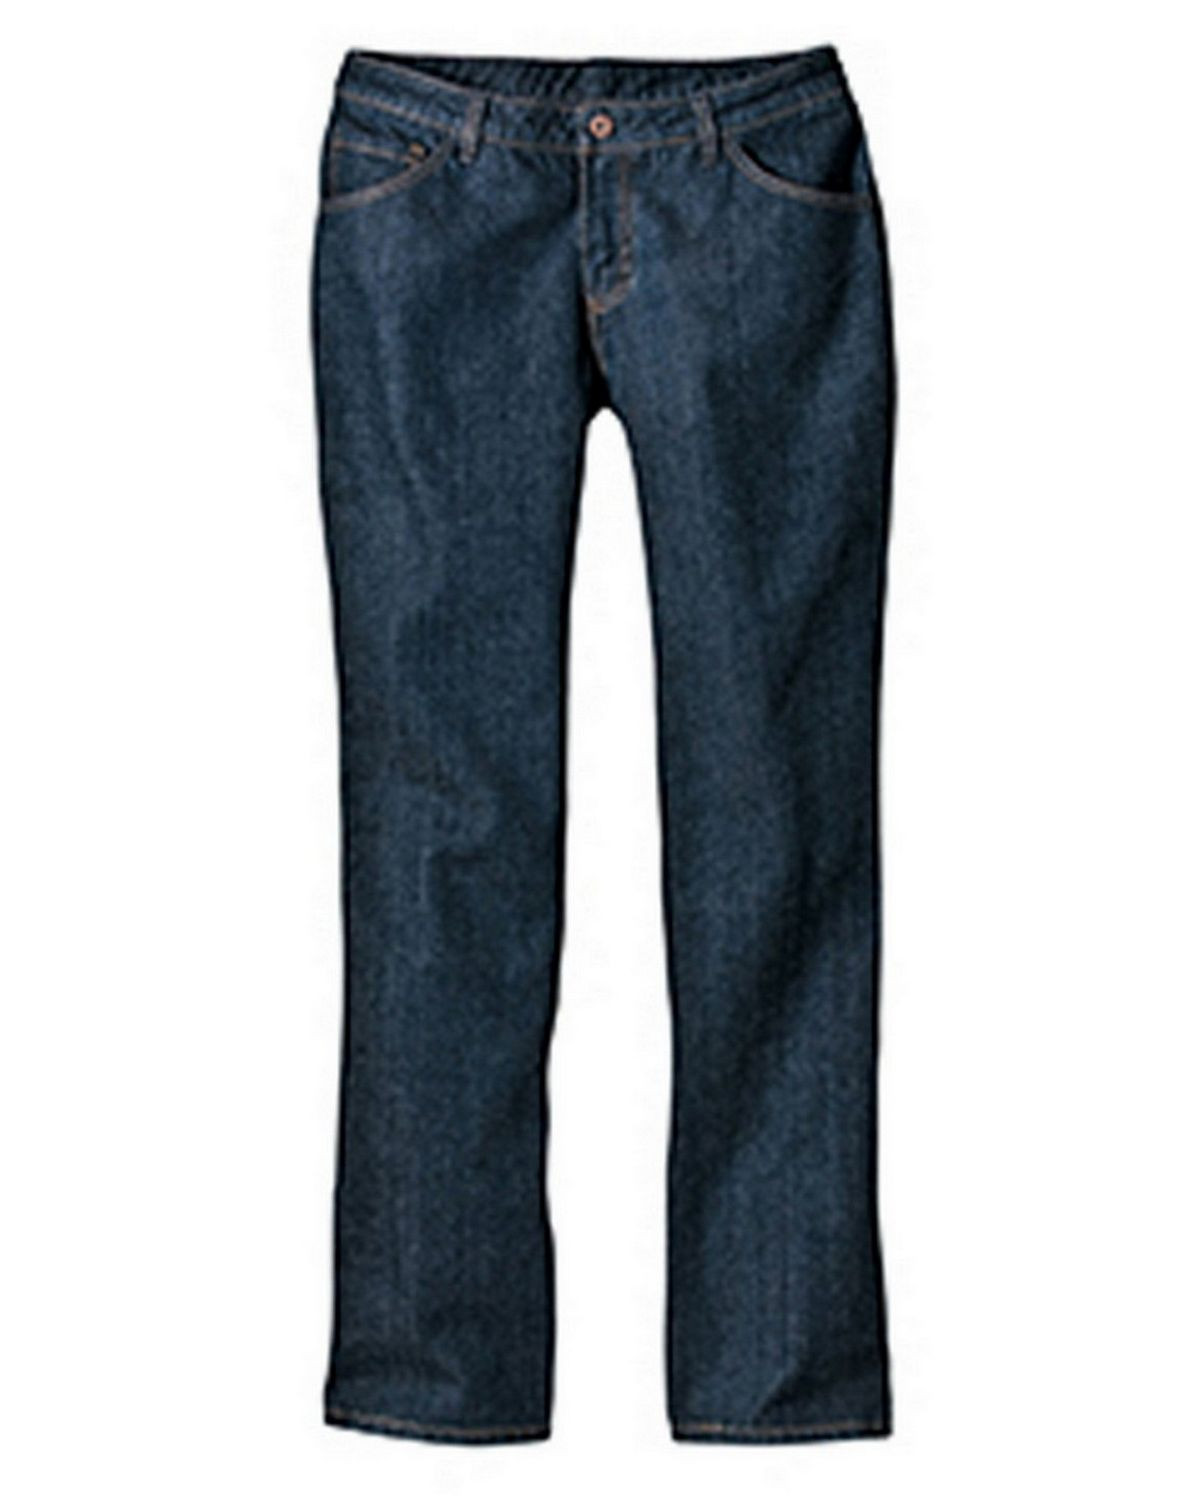 Dickies FD231 Women's Denim Five-Pocket Jean - Indigo Blue - 34T x 16 #denim